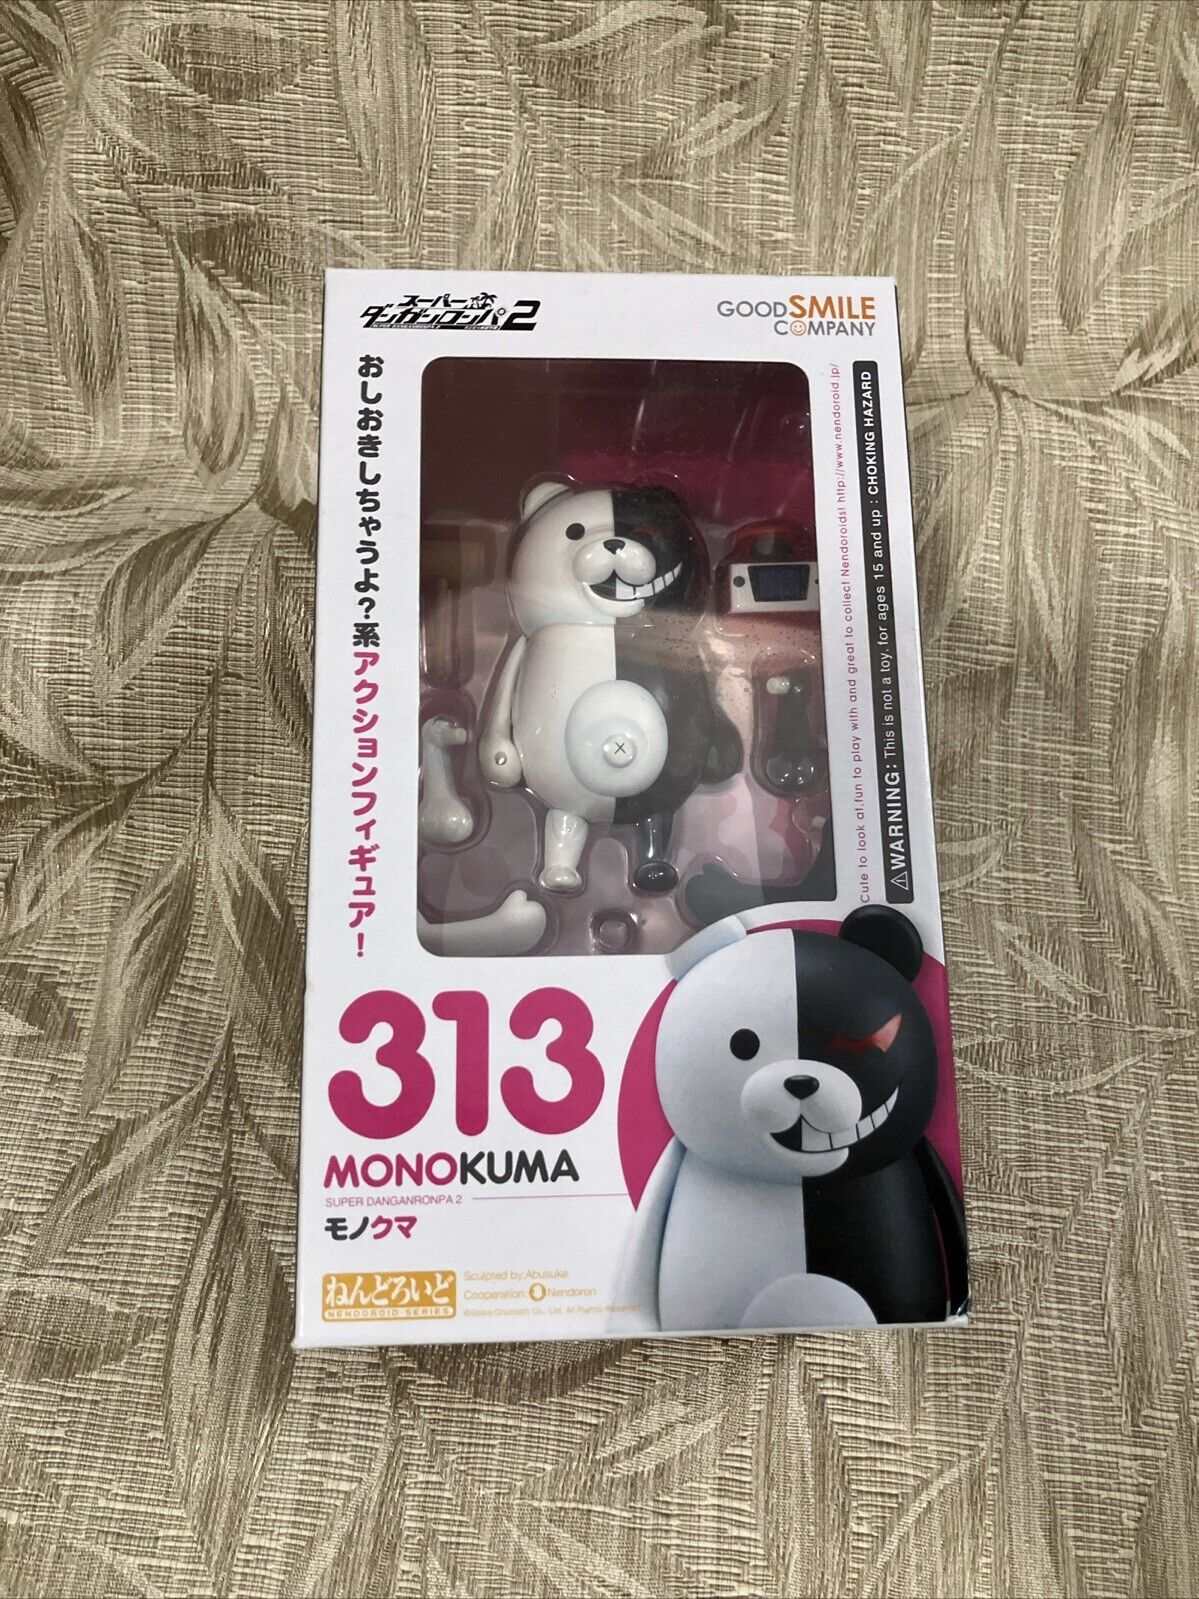 Good Smile Nendoroid #313 Super Danganronpa 2 Monokuma PVC Figure CIB